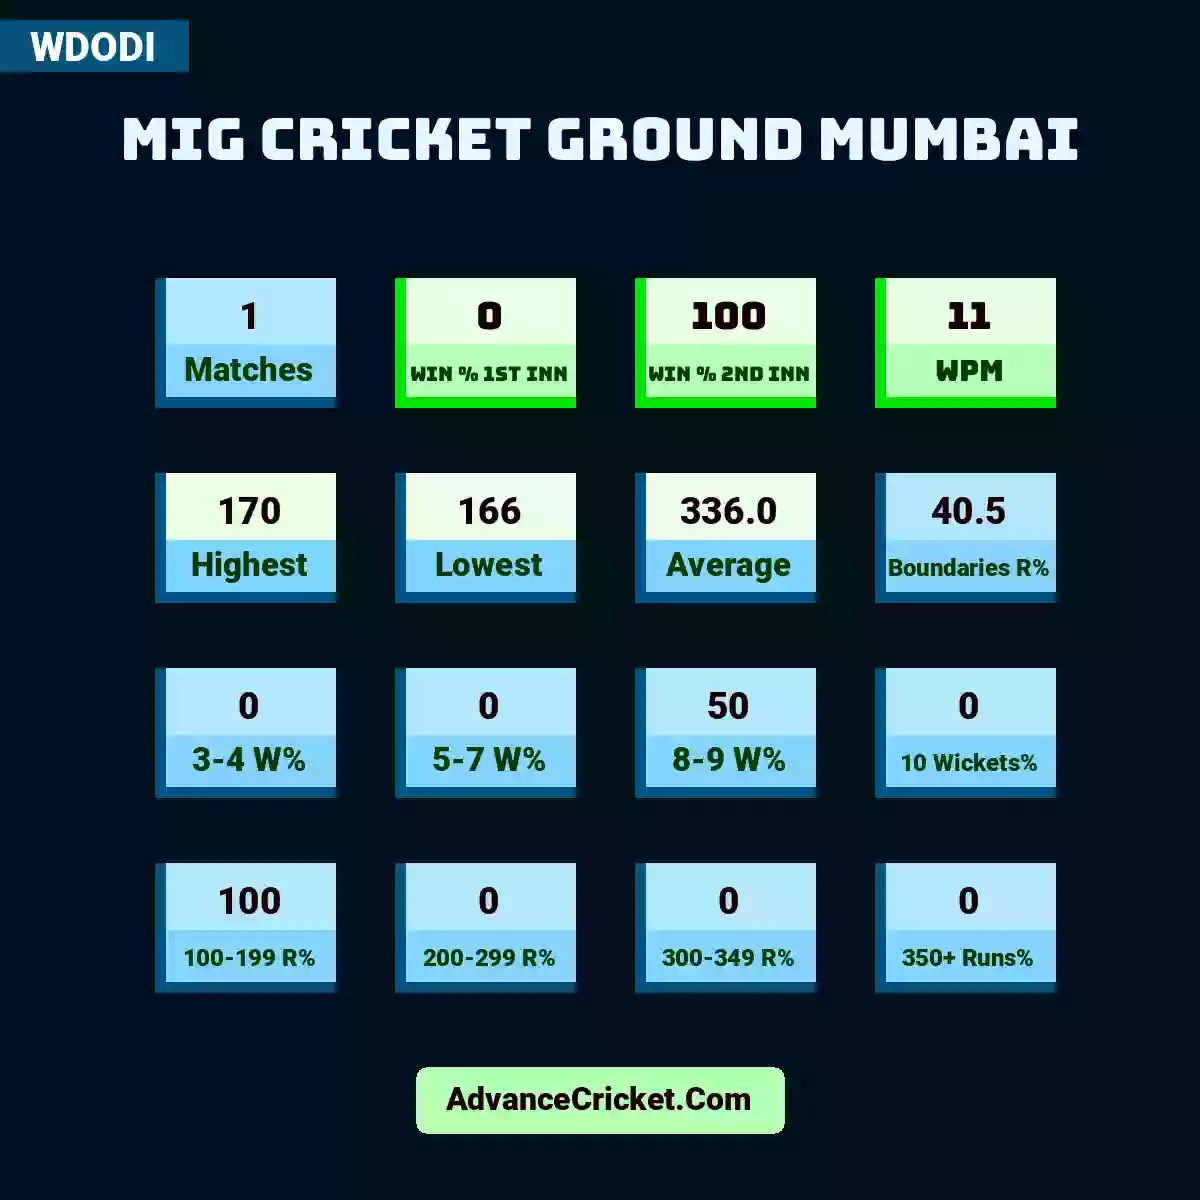 Image showing Mig Cricket Ground Mumbai with Matches: 1, Win % 1st Inn: 0, Win % 2nd Inn: 100, WPM: 11, Highest: 170, Lowest: 166, Average: 336.0, Boundaries R%: 40.5, 3-4 W%: 0, 5-7 W%: 0, 8-9 W%: 50, 10 Wickets%: 0, 100-199 R%: 100, 200-299 R%: 0, 300-349 R%: 0, 350+ Runs%: 0.